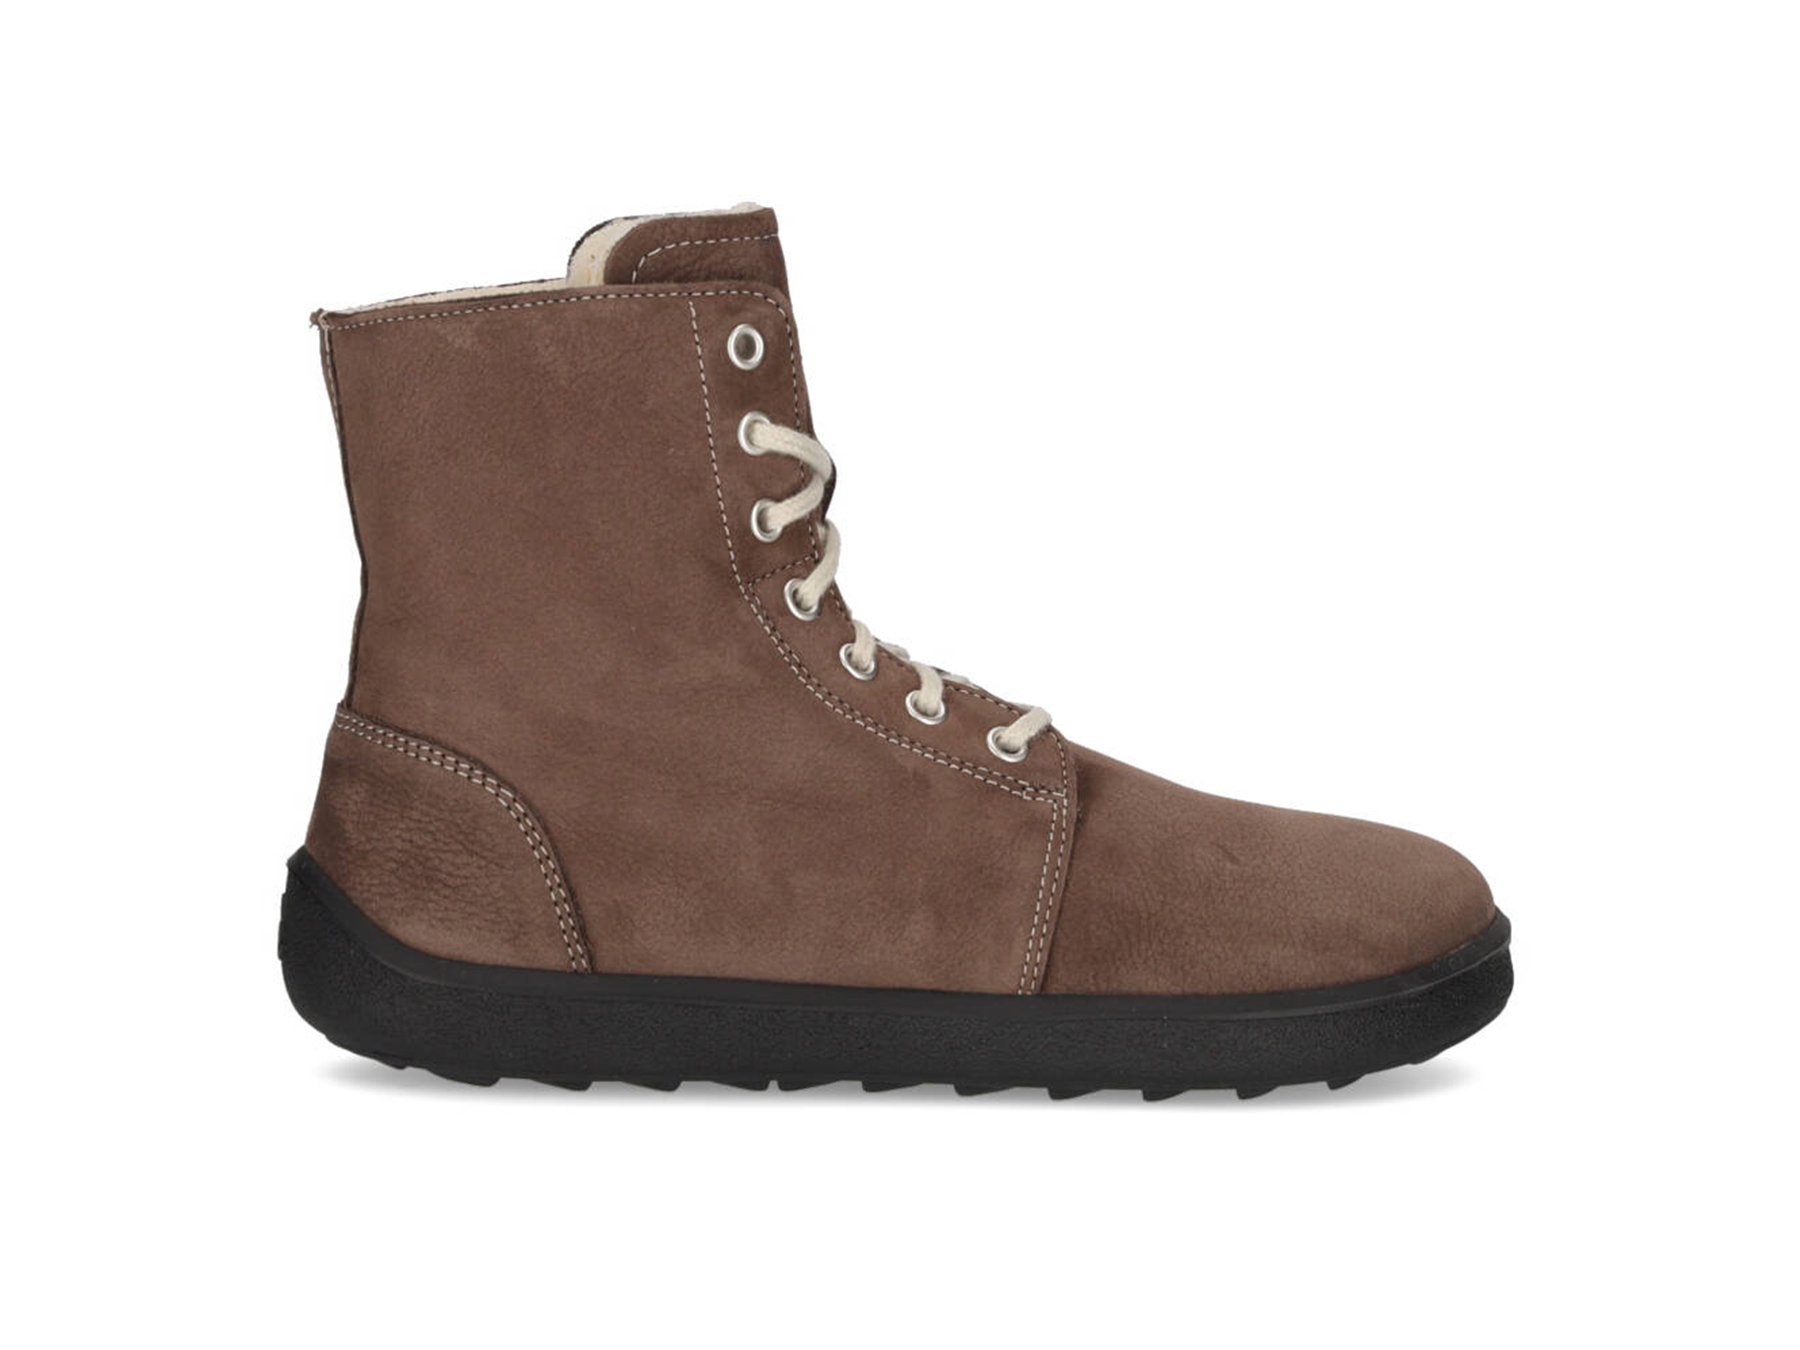 Barefoot Boots - Be Winter 2.0 - Chocolate | Be Lenka